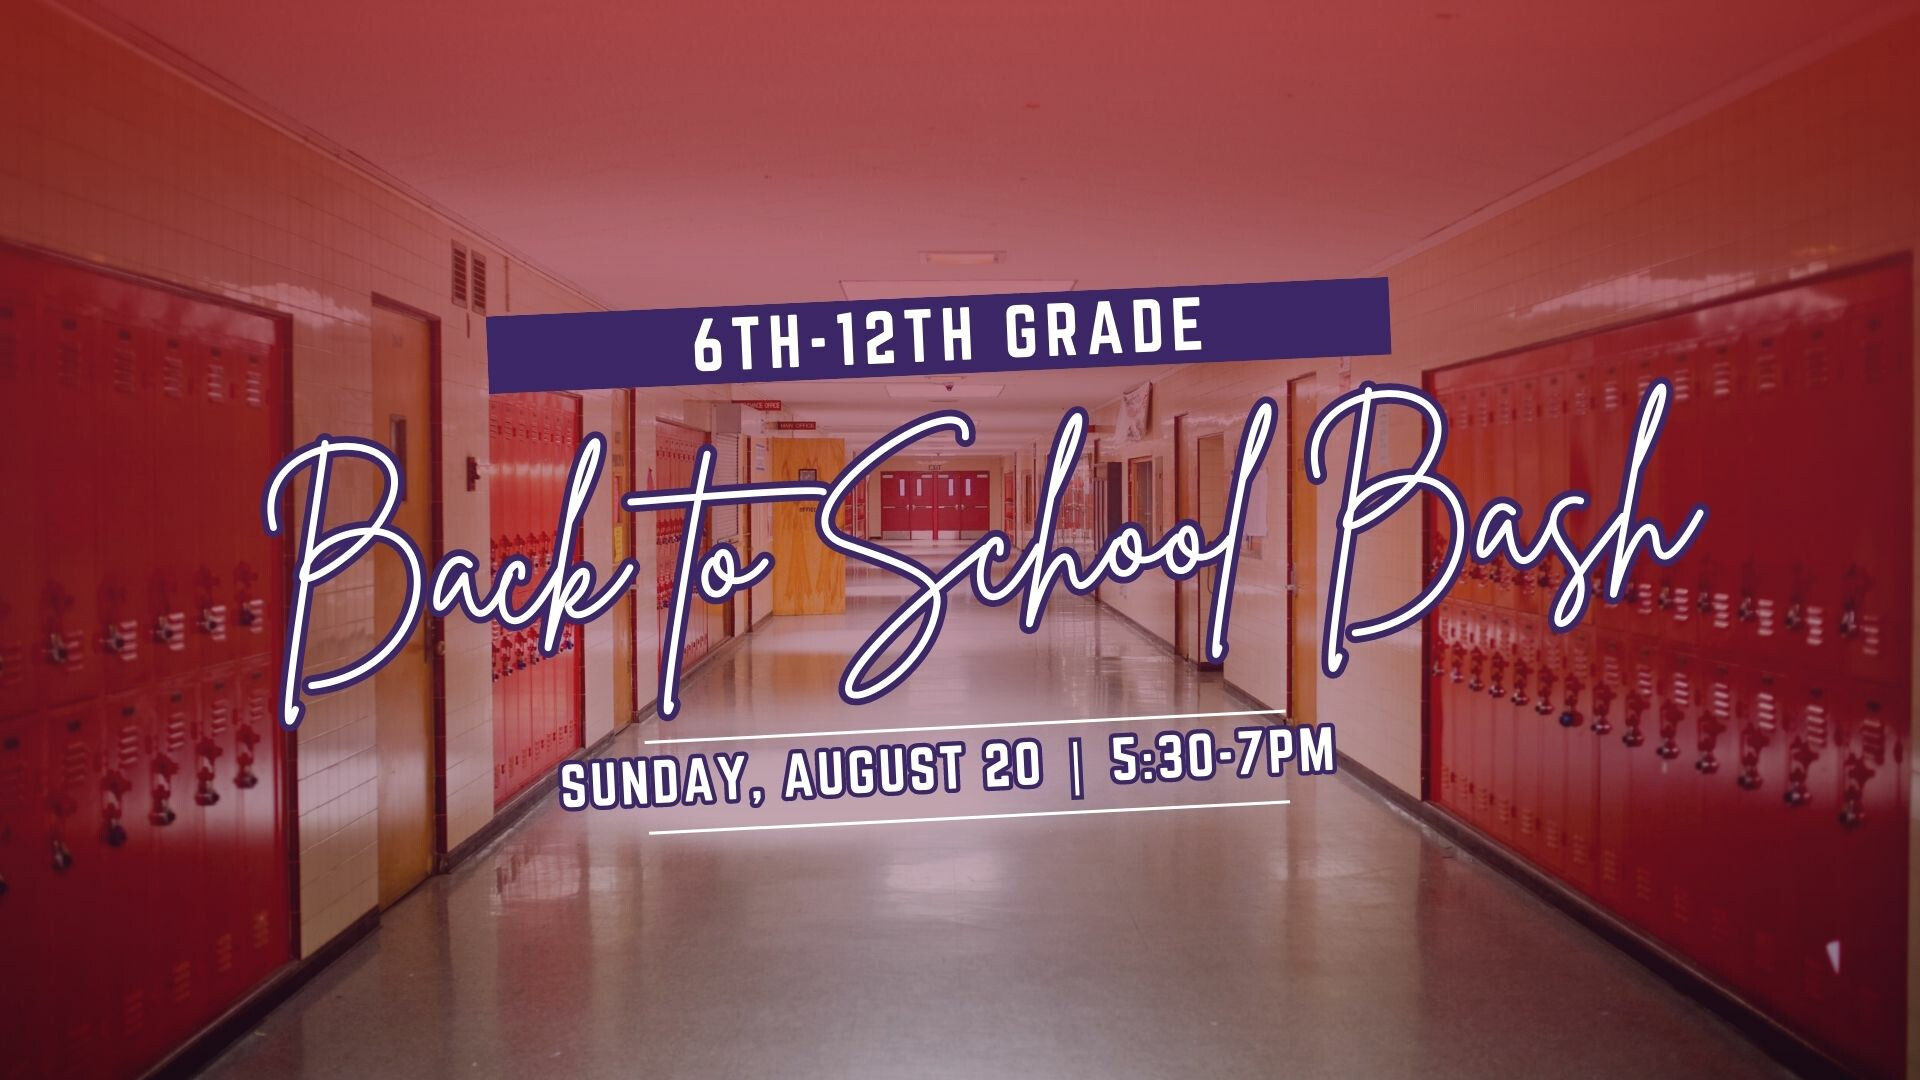 Back to School Bash (6th-12th Grade)